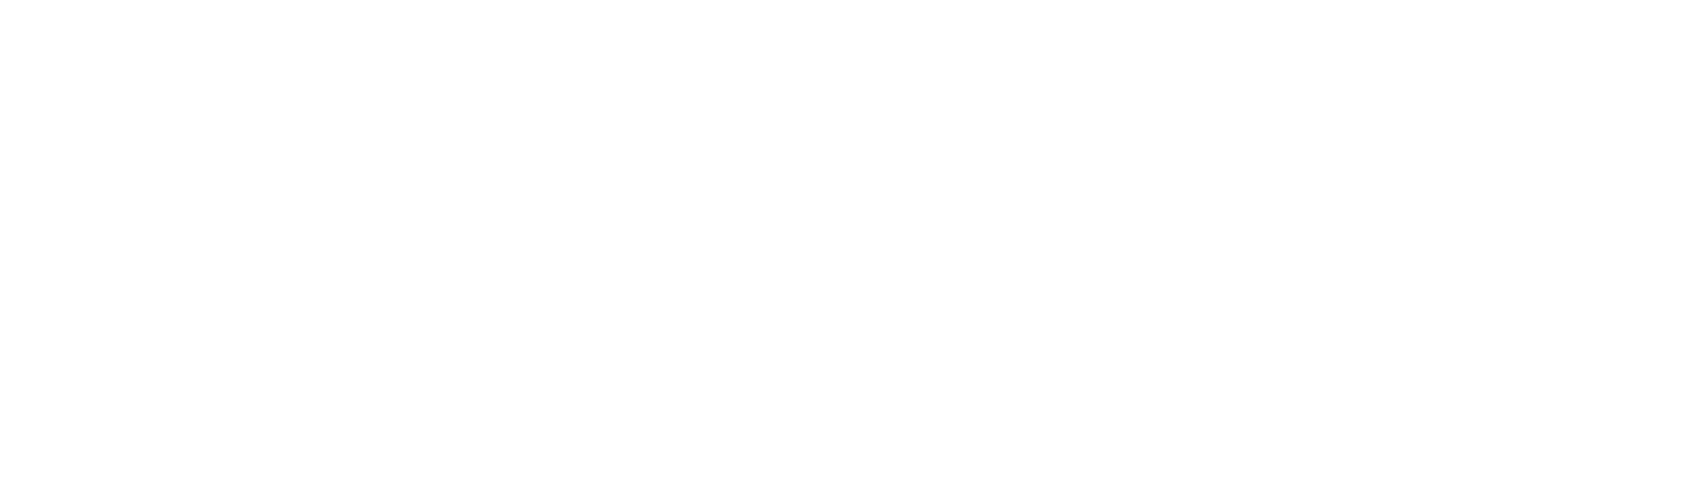 Yakamoz Logo